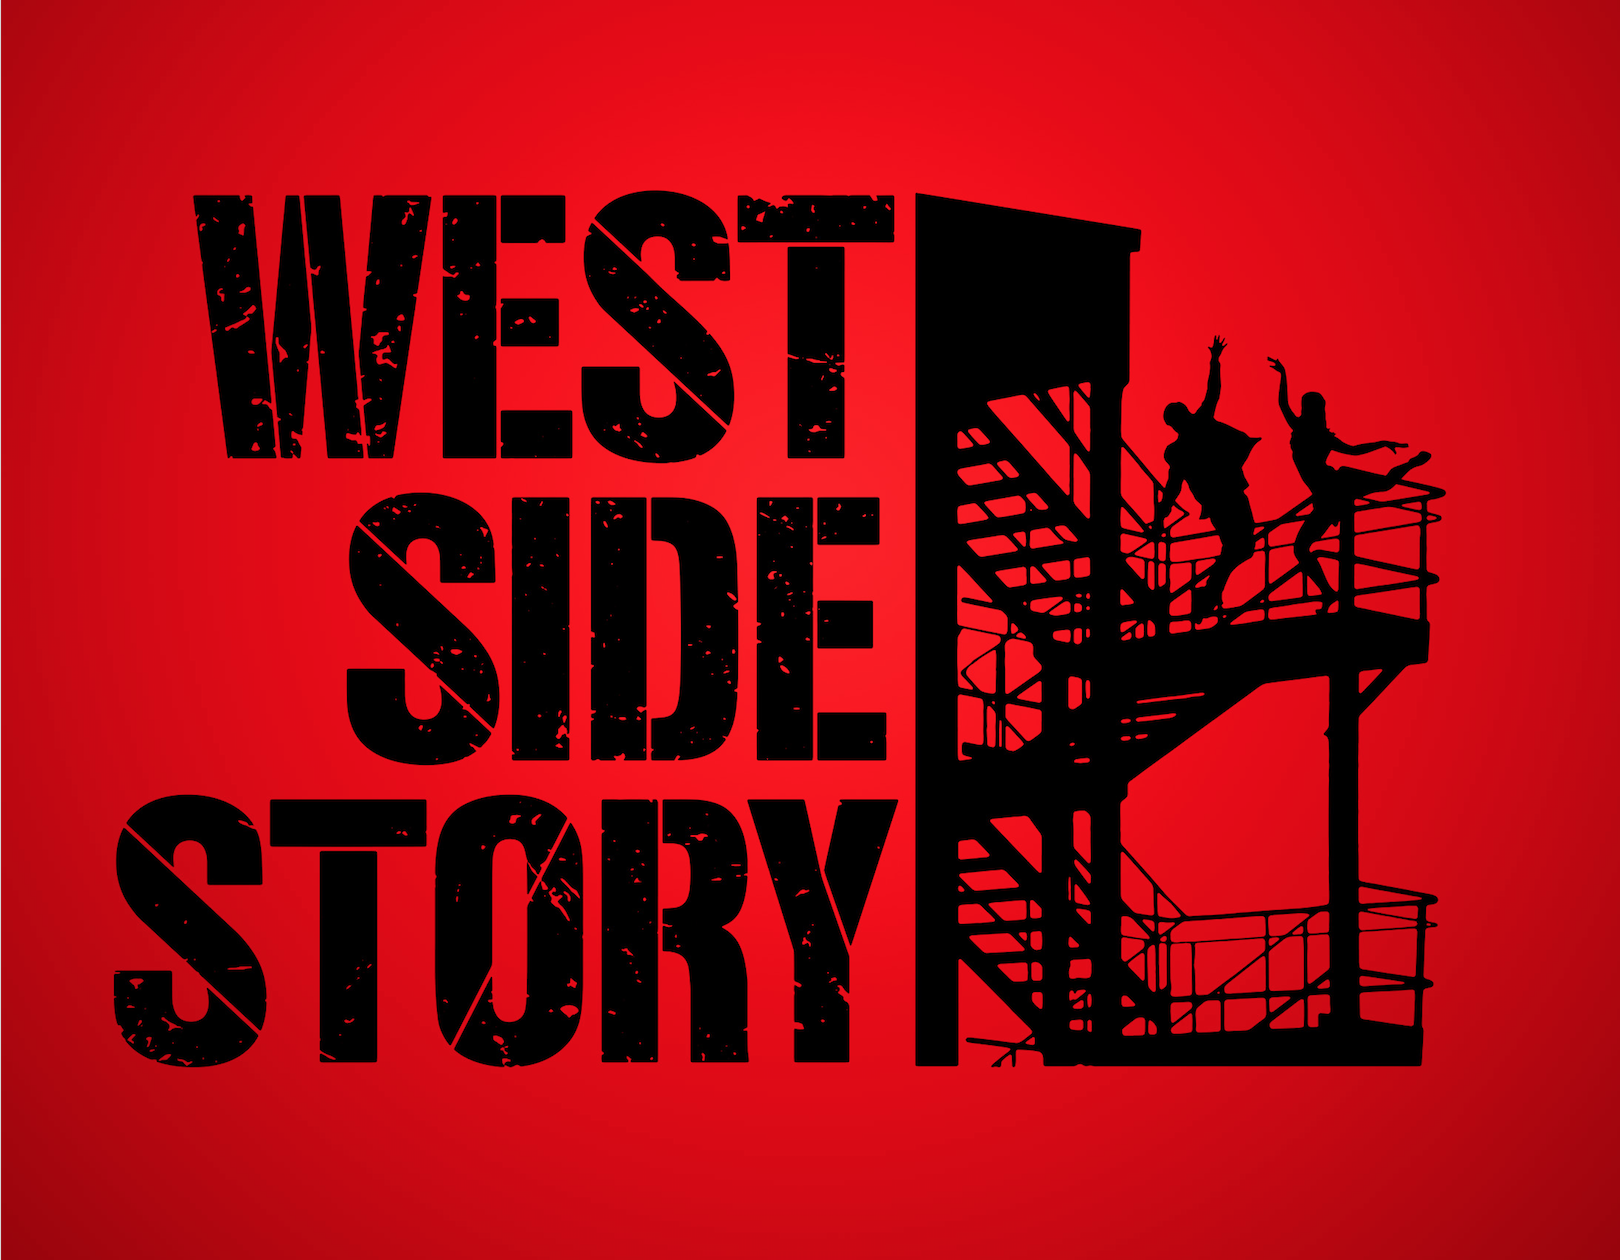 W stories. West Side story. West Side story 1957. West Side story 1961.